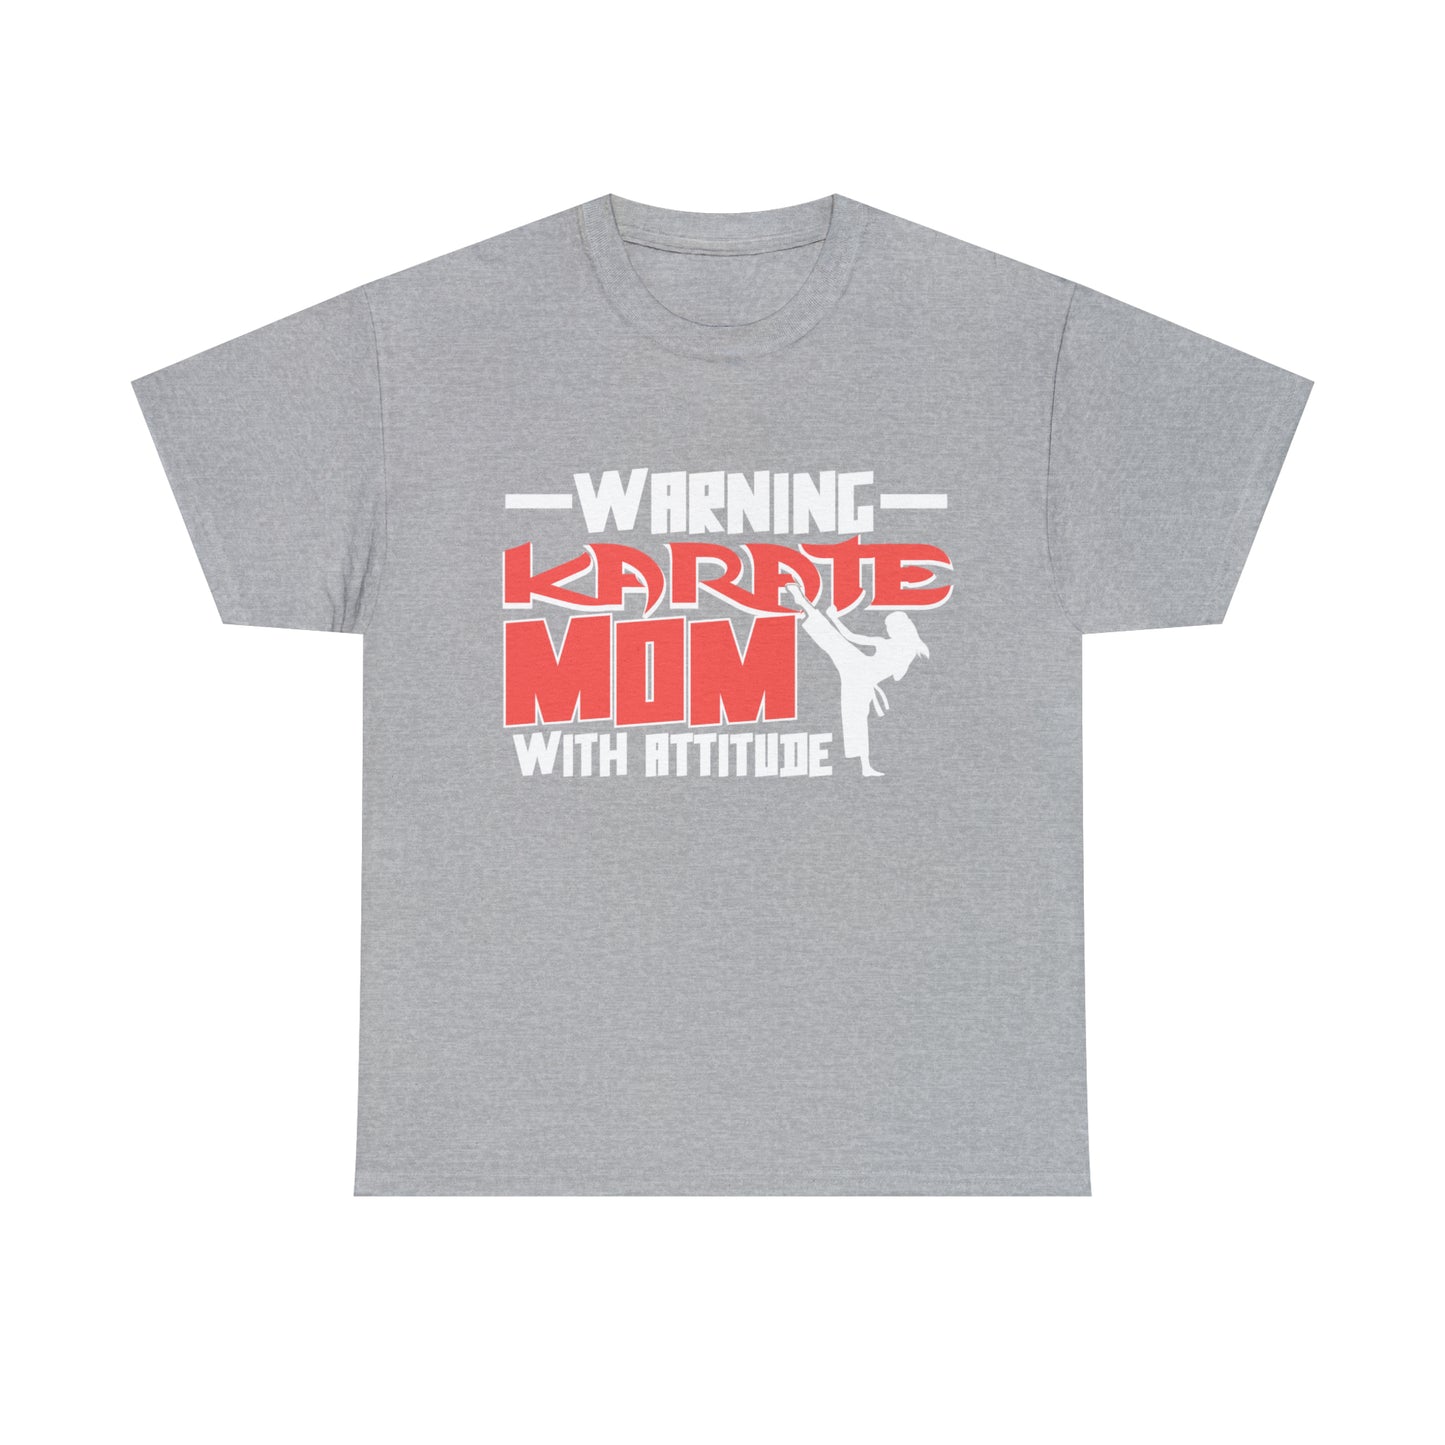 Warning Karate Mom With Attitude! Life Heavy Cotton Tee